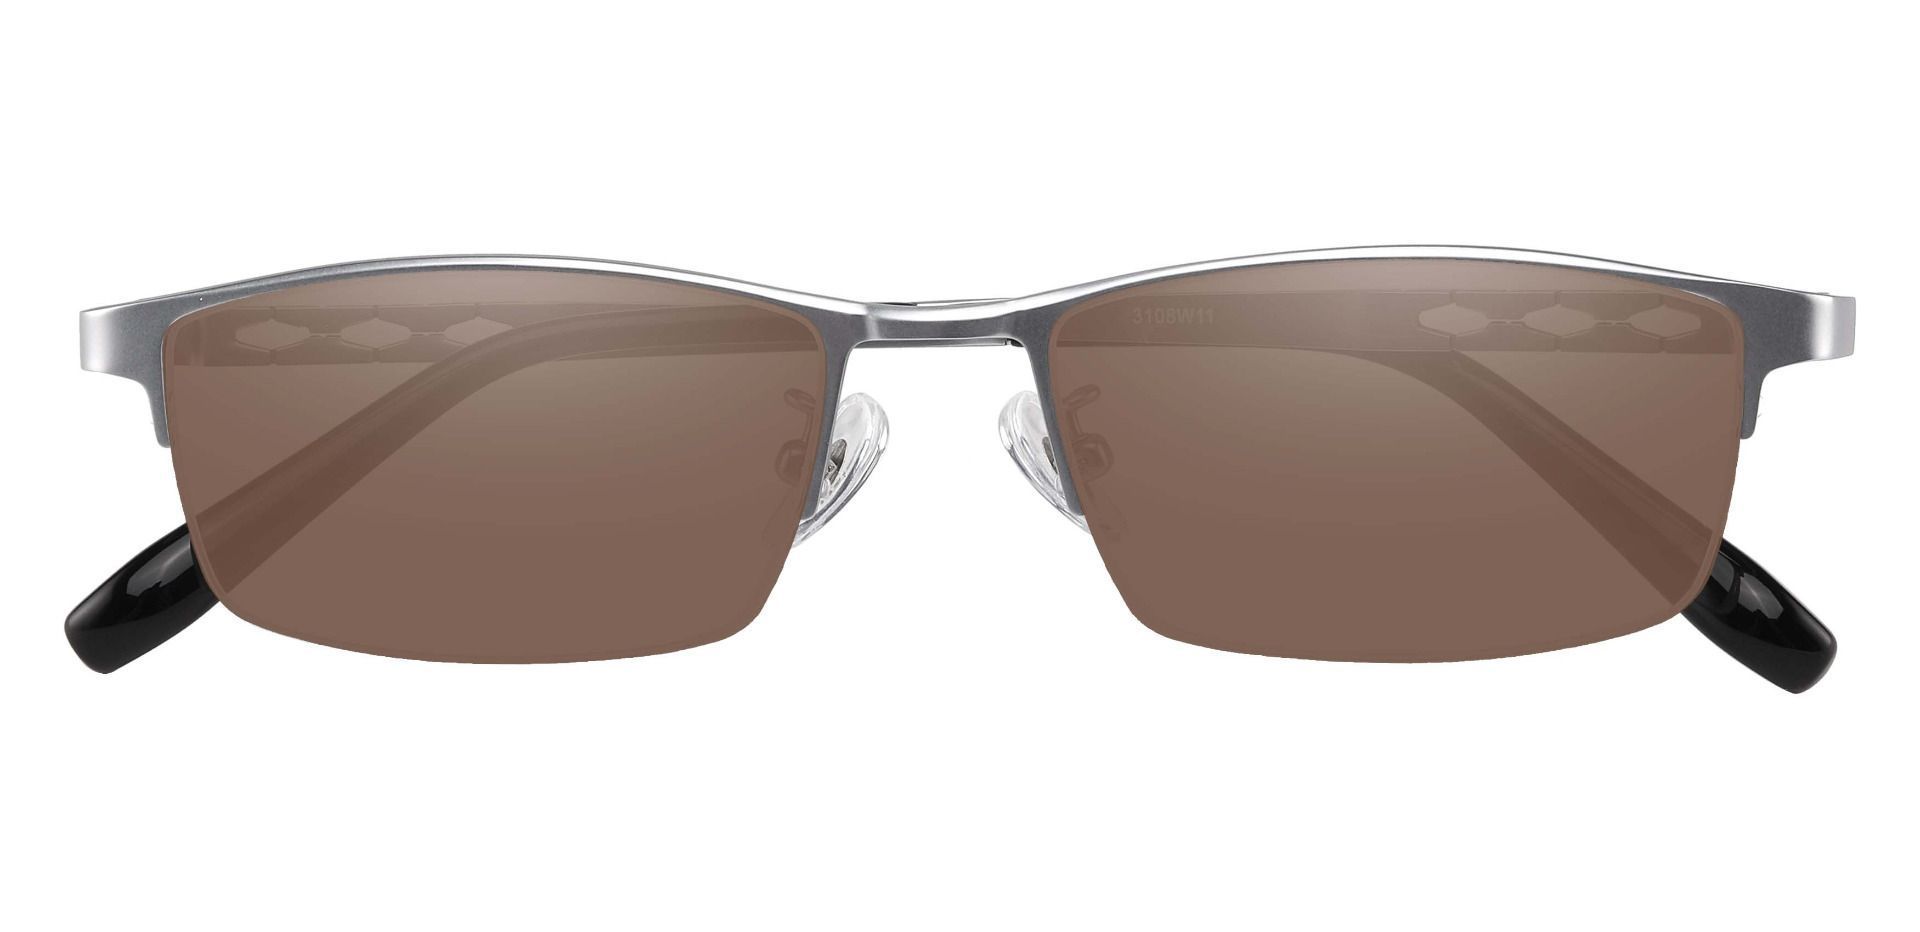 Burlington Rectangle Prescription Sunglasses - Silver Frame With Brown Lenses